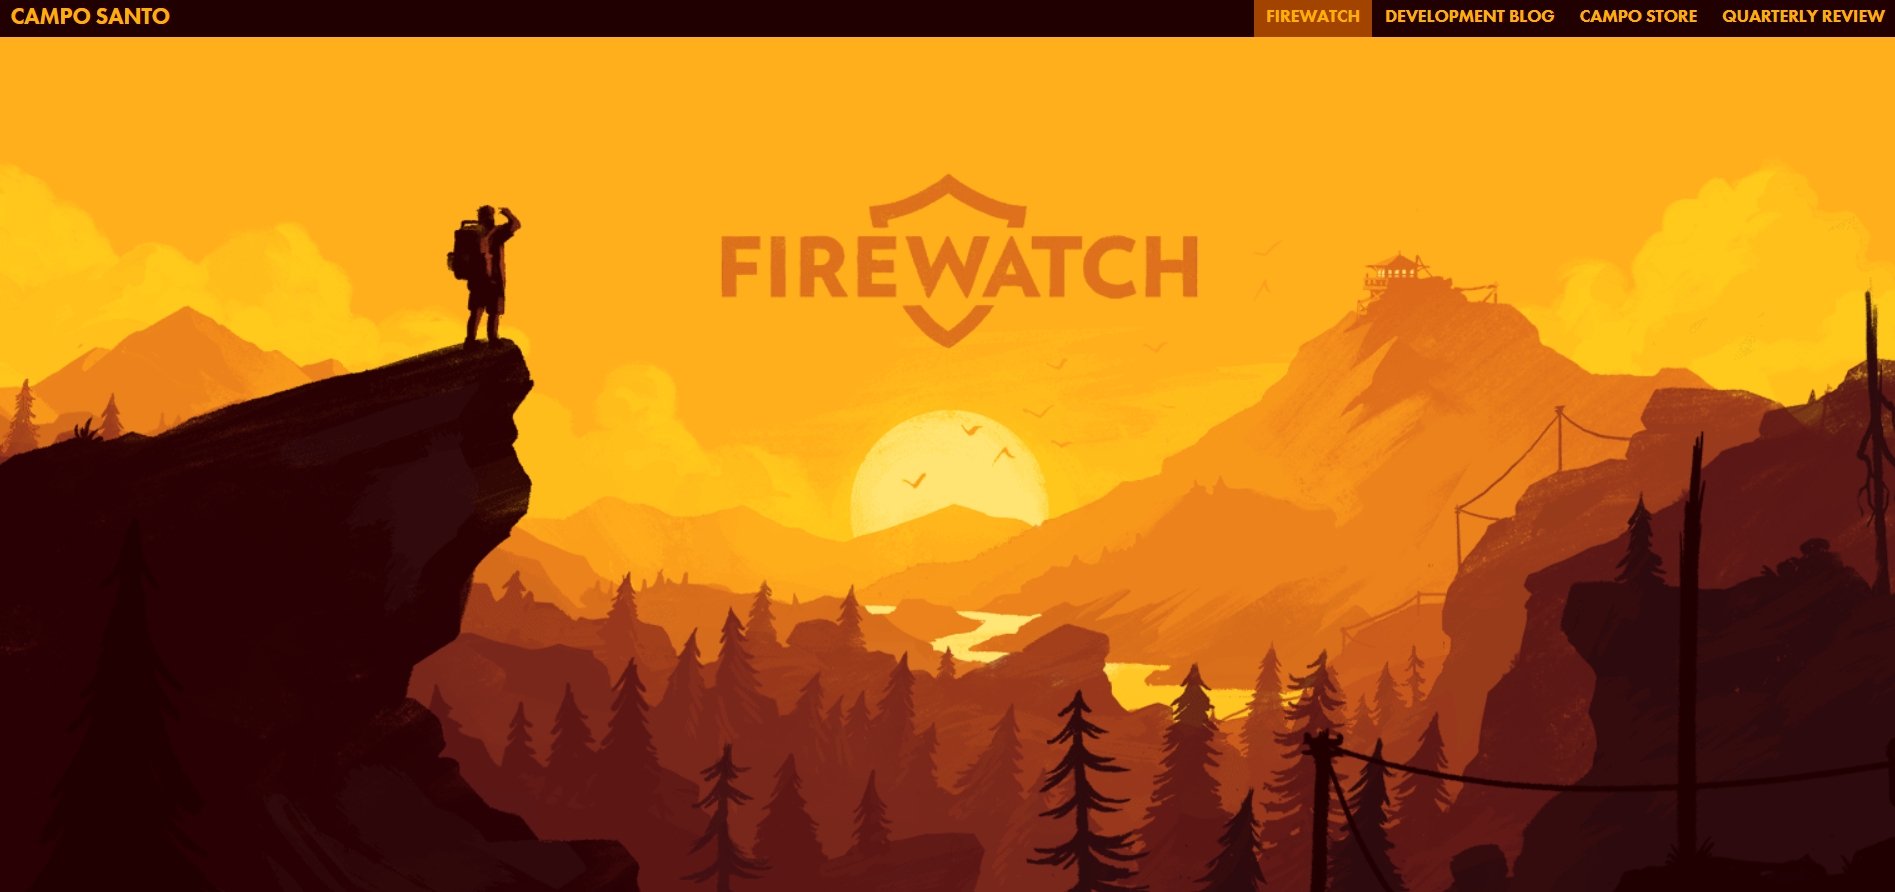 Firewatch website, featuring a man on a cliff overlooking a sunset